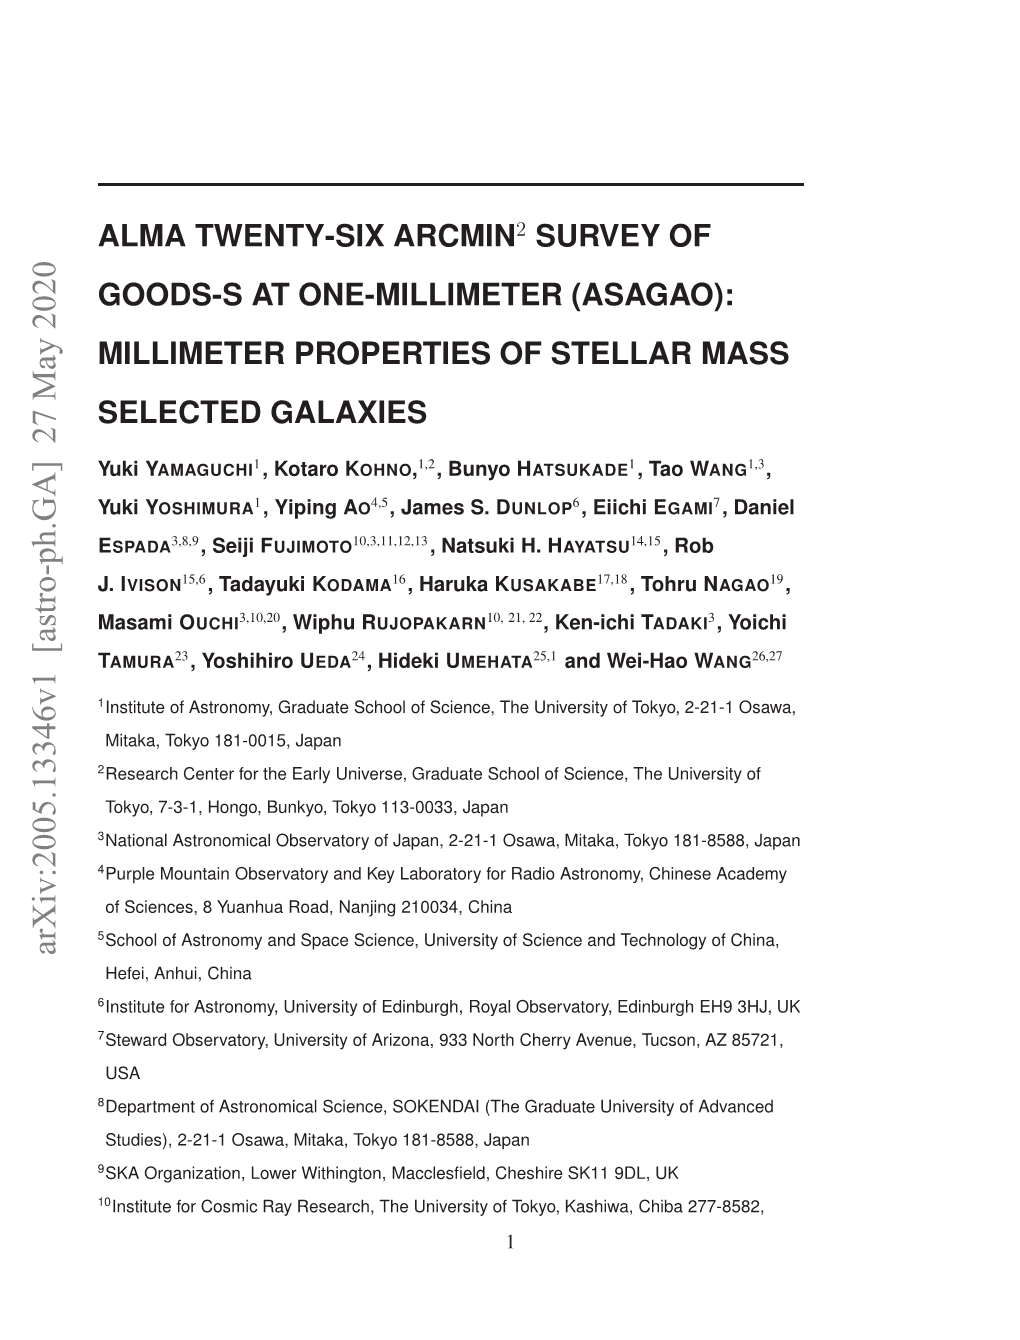 (Asagao): Millimeter Properties of Stellar Mass Selected Galaxies